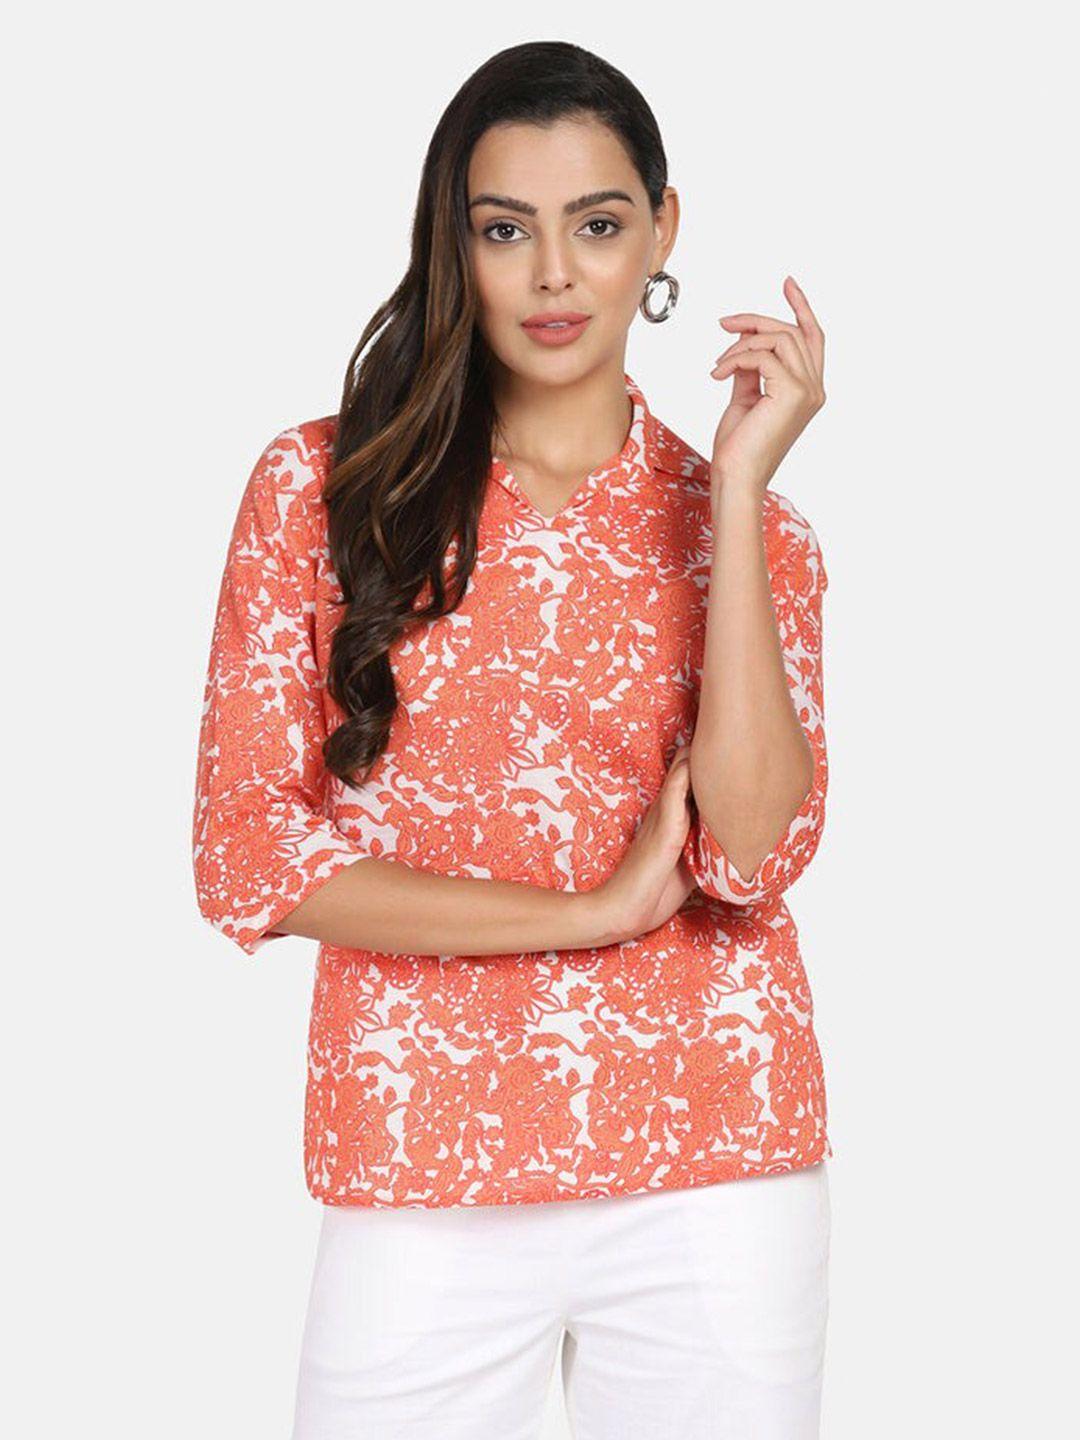 powersutra orange & white floral print shirt style pure cotton top